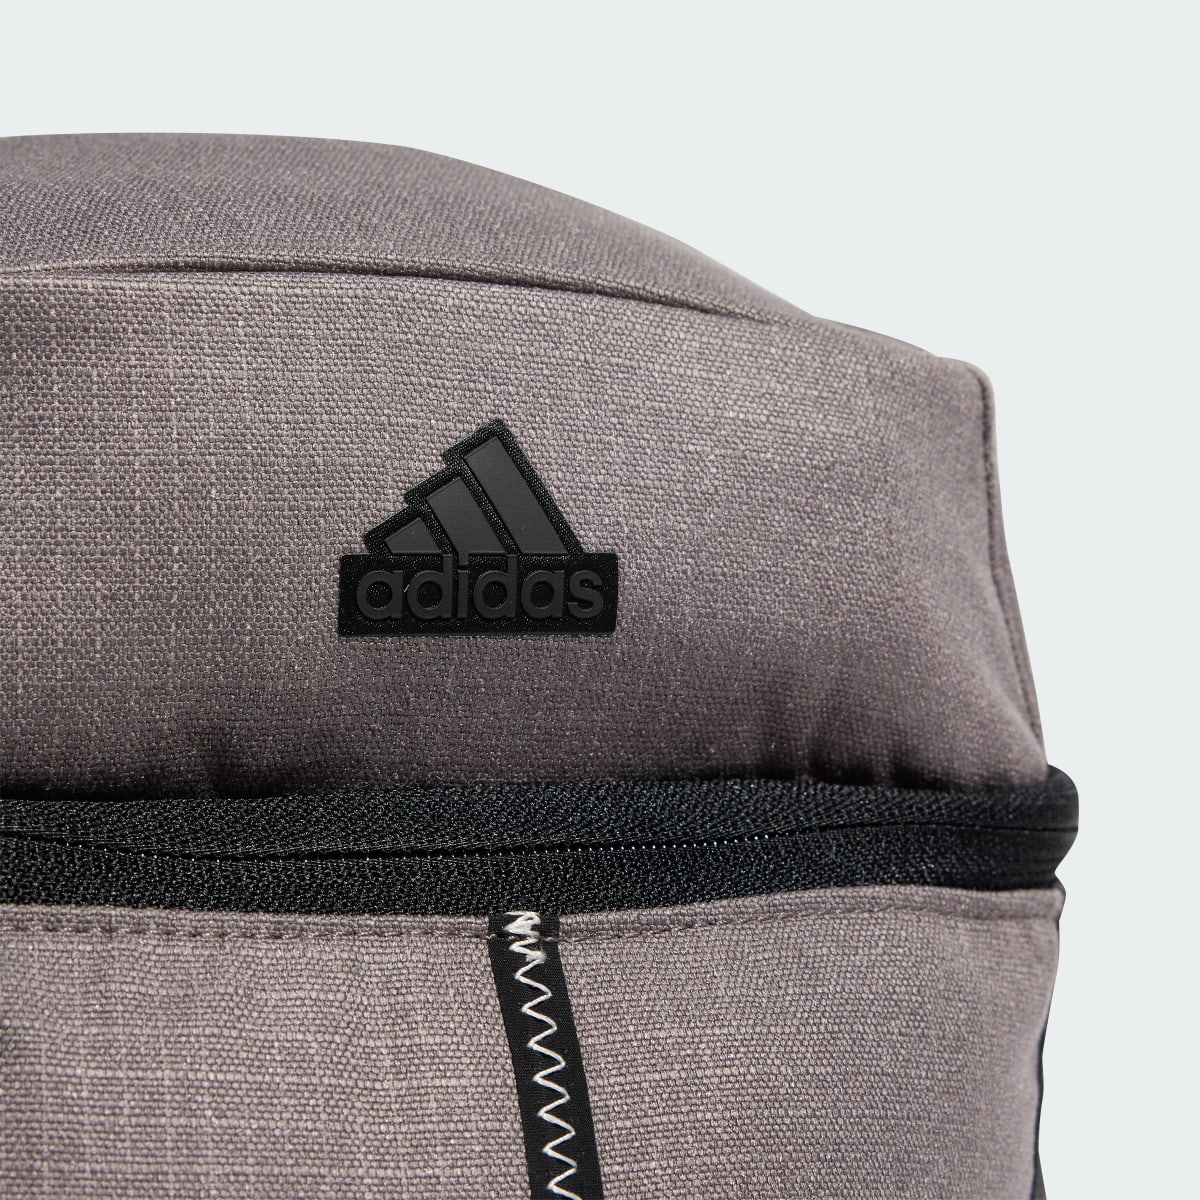 Adidas Xplorer Backpack. 5